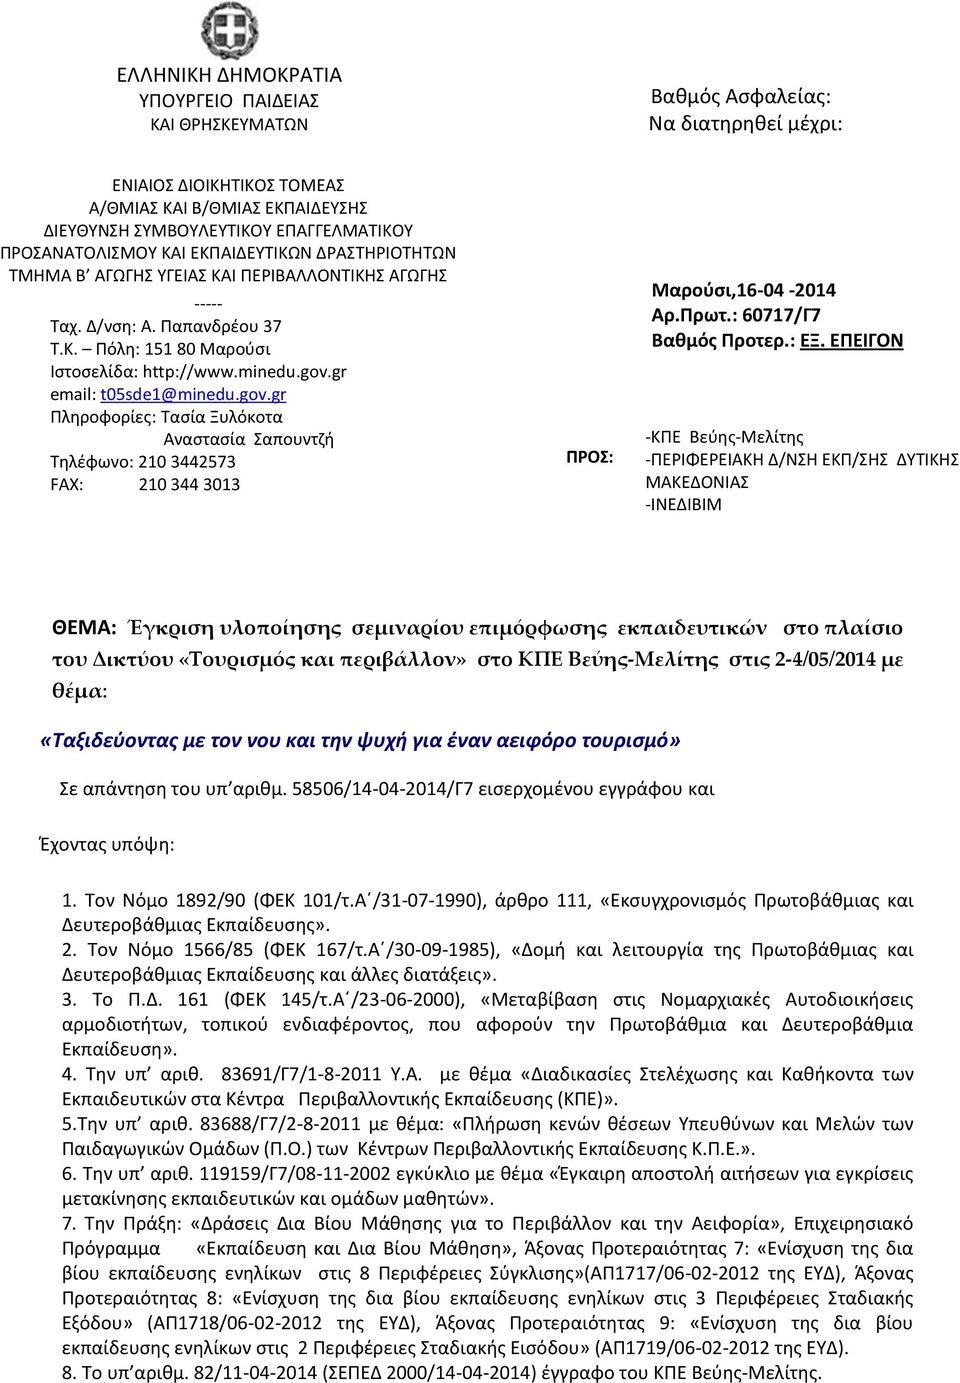 gr email: t05sde1@minedu.gov.gr Πληροφορίες: Τασία Ξυλόκοτα Aναστασία Σαπουντζή Τηλέφωνο: 210 3442573 FAX: 210 344 3013 ΠΡΟΣ: Βαθμός Ασφαλείας: Να διατηρηθεί μέχρι: Μαρούσι,16-04 -2014 Αρ.Πρωτ.